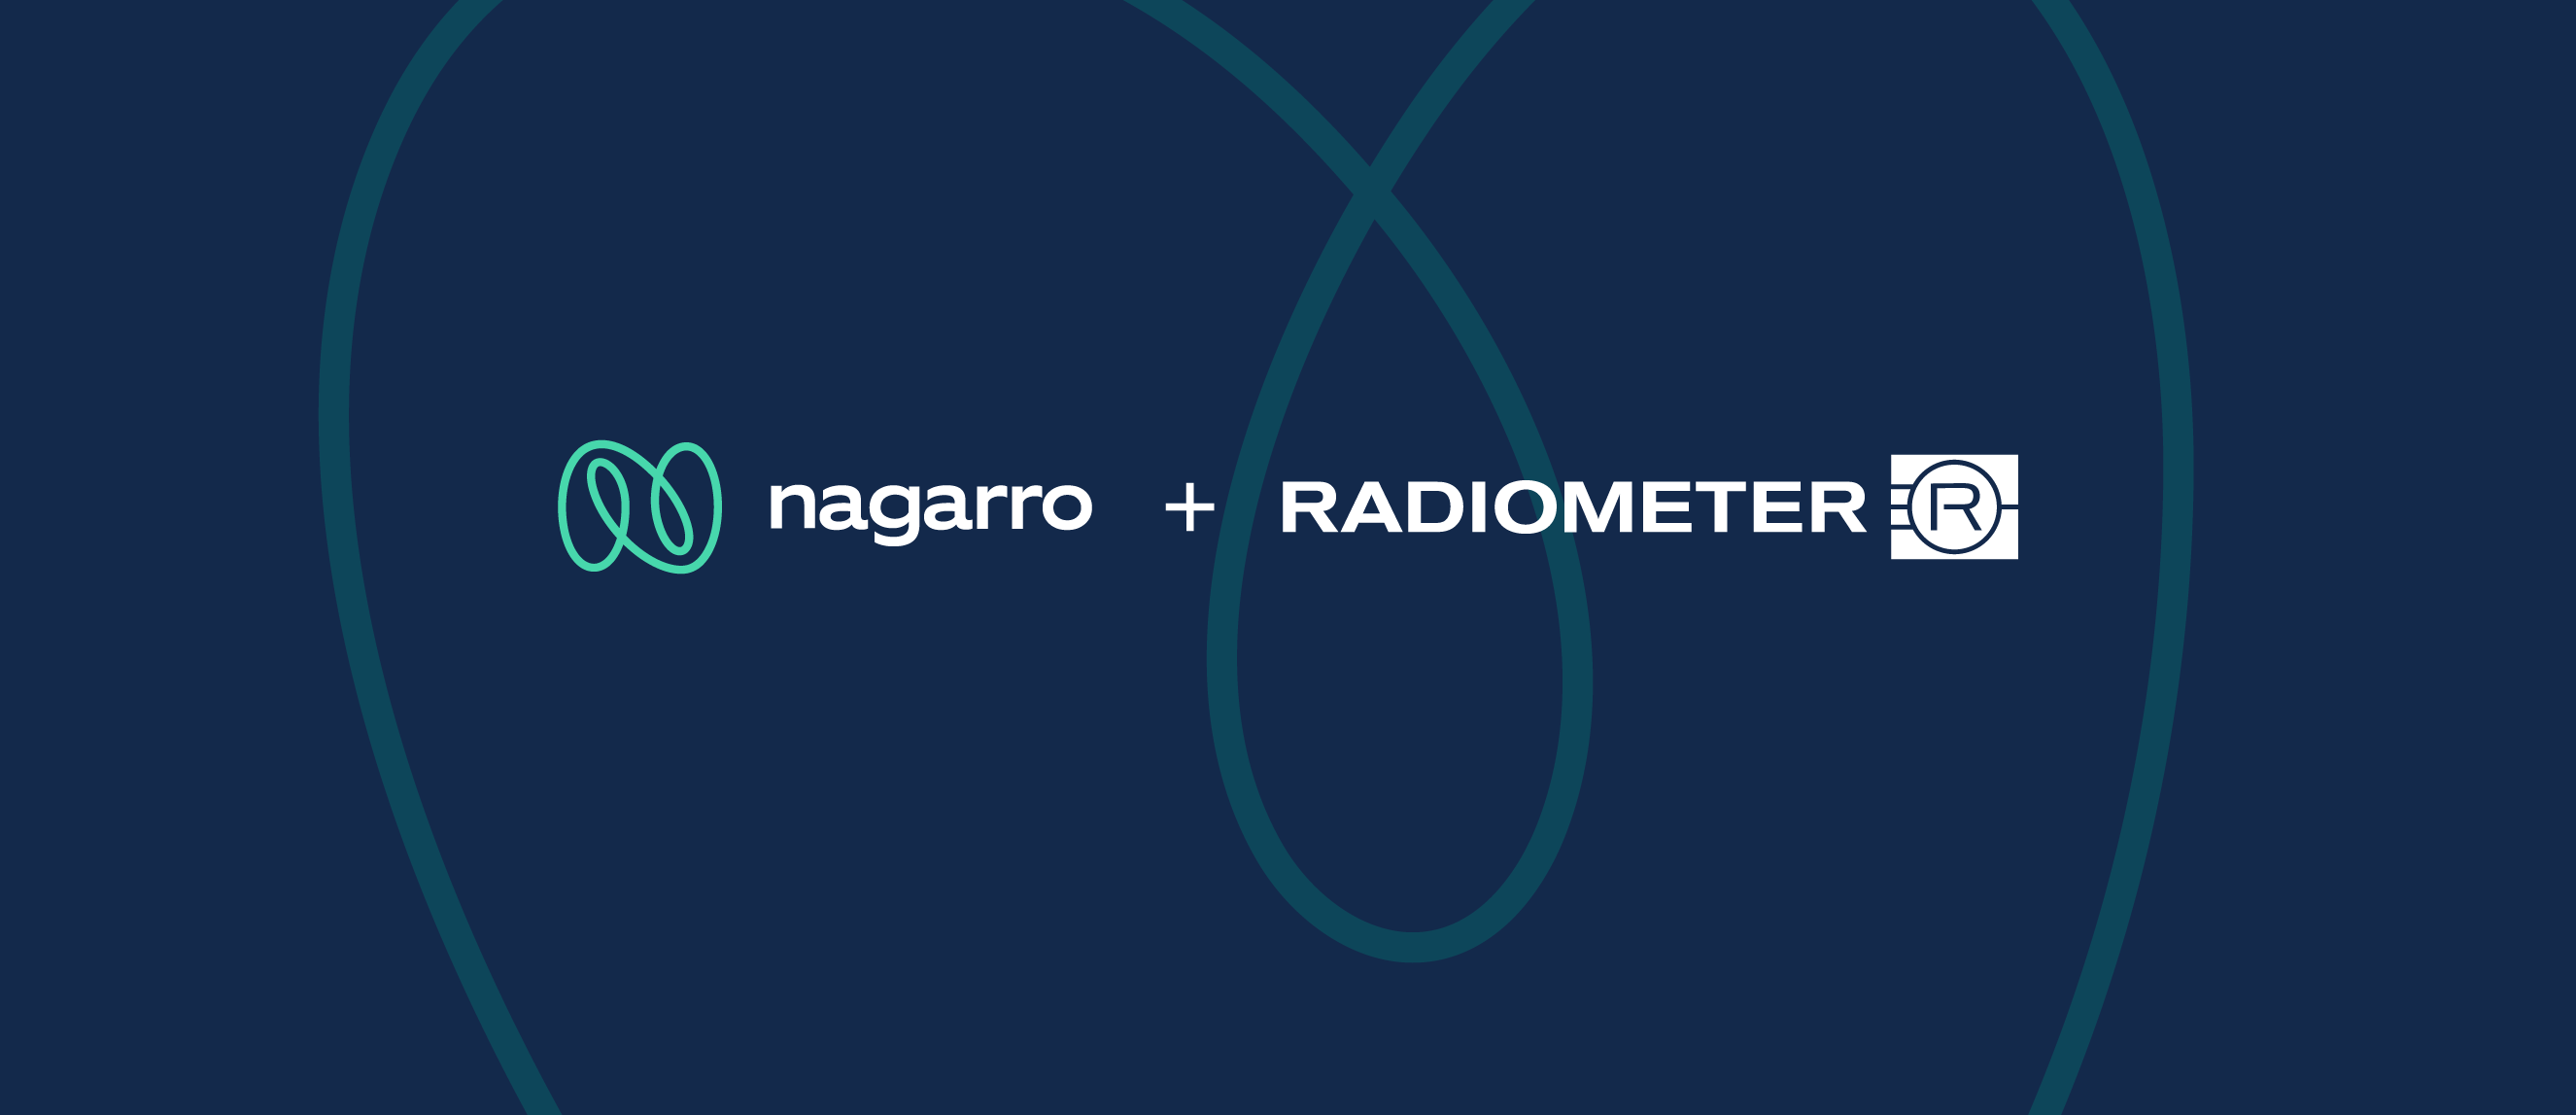 Nagarro + Radiometer_Desktop